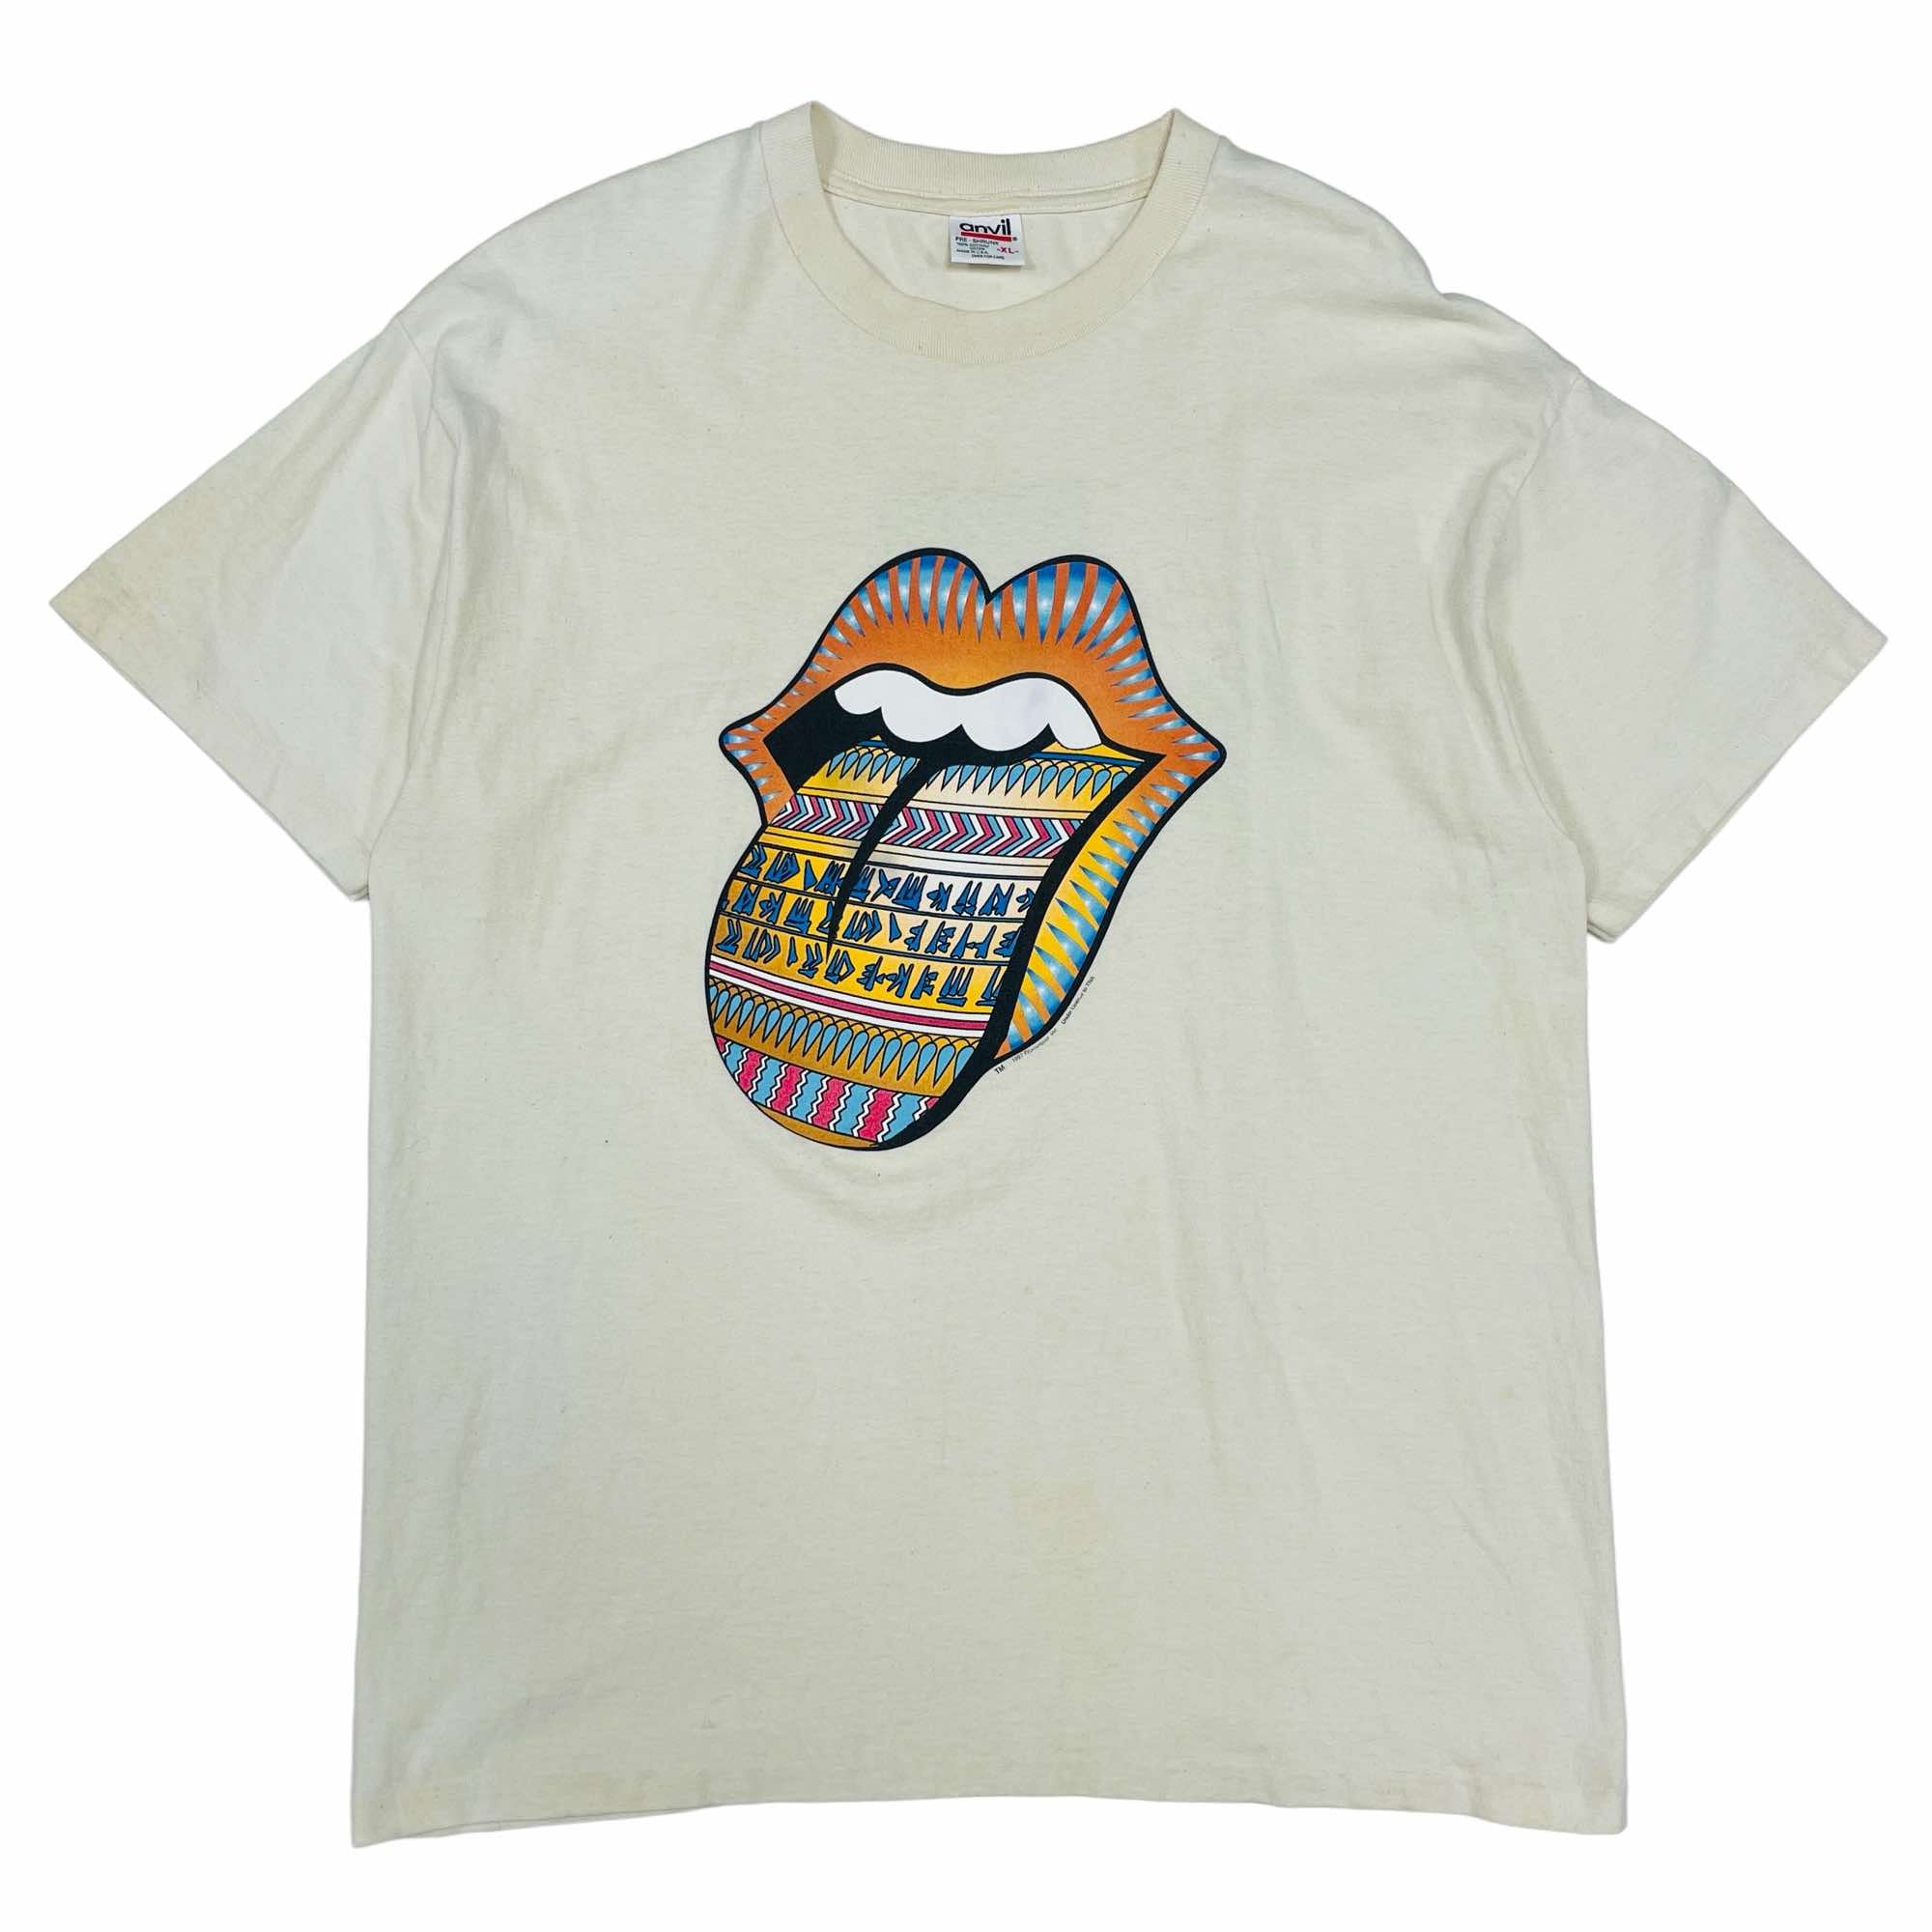 1997 Rolling Stones Bridges to Babylon T-Shirt - Large